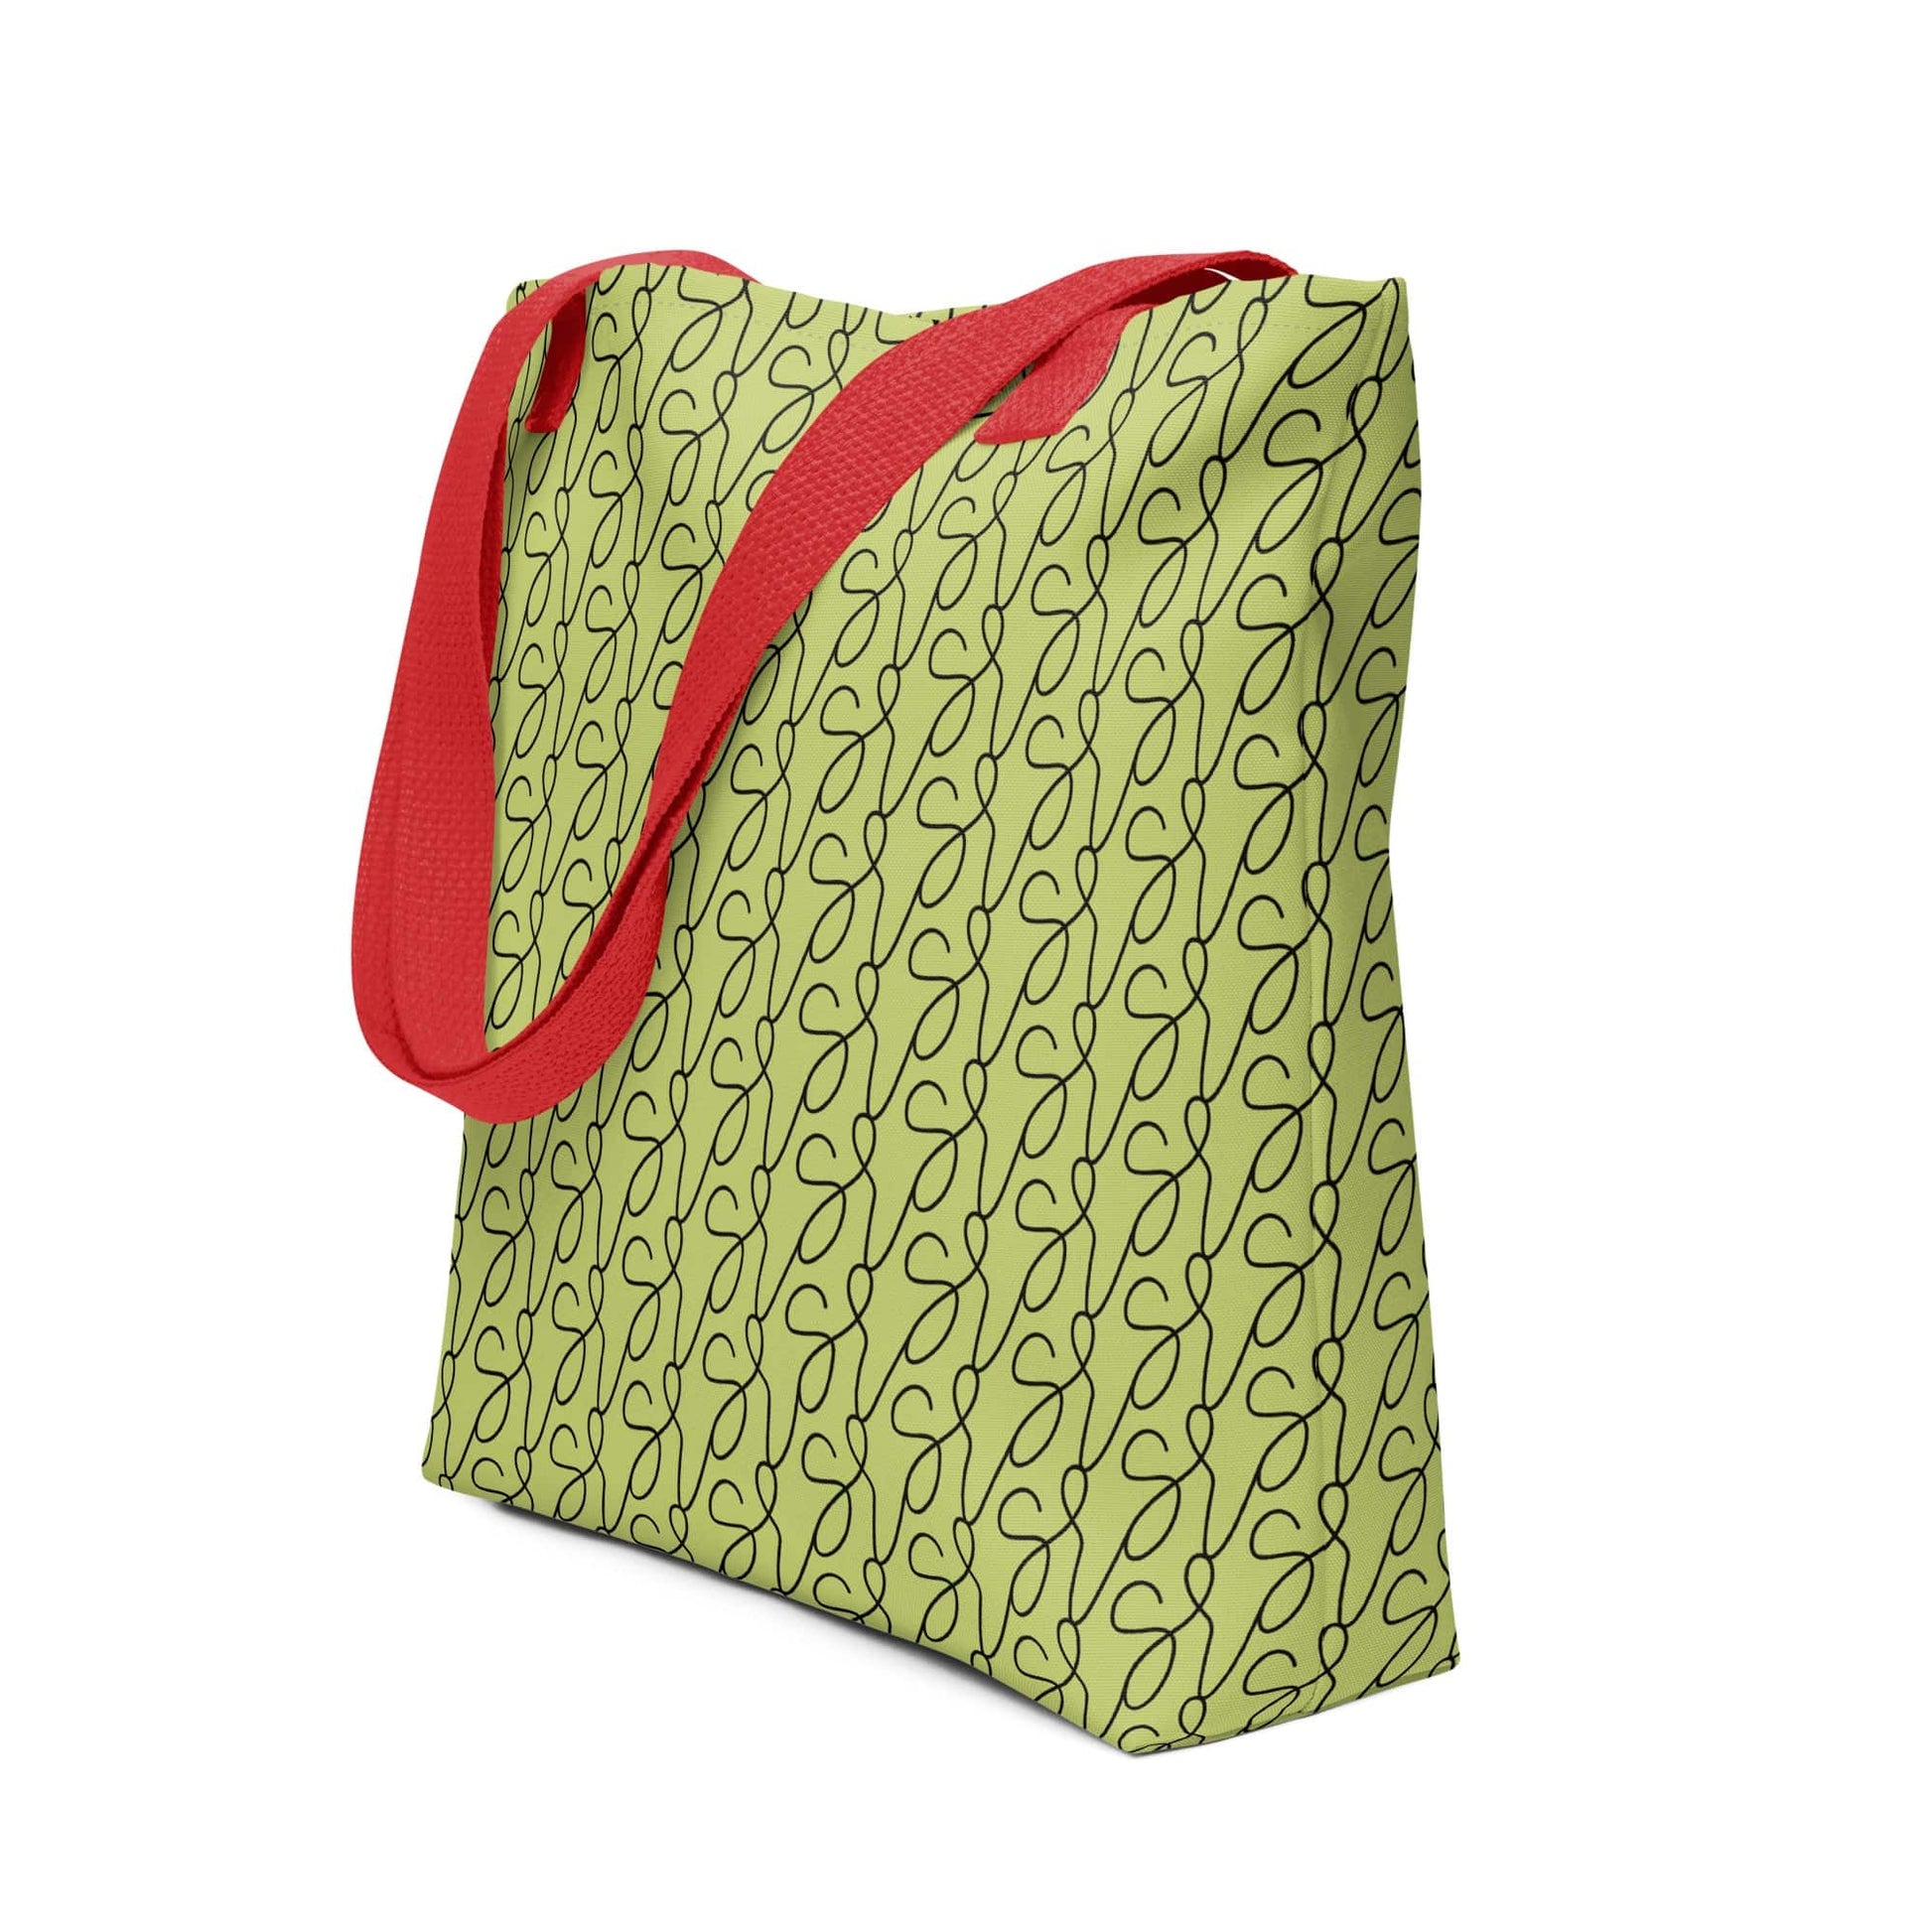 Olive Green Logo Tote Bag -  - San Rocco Italia